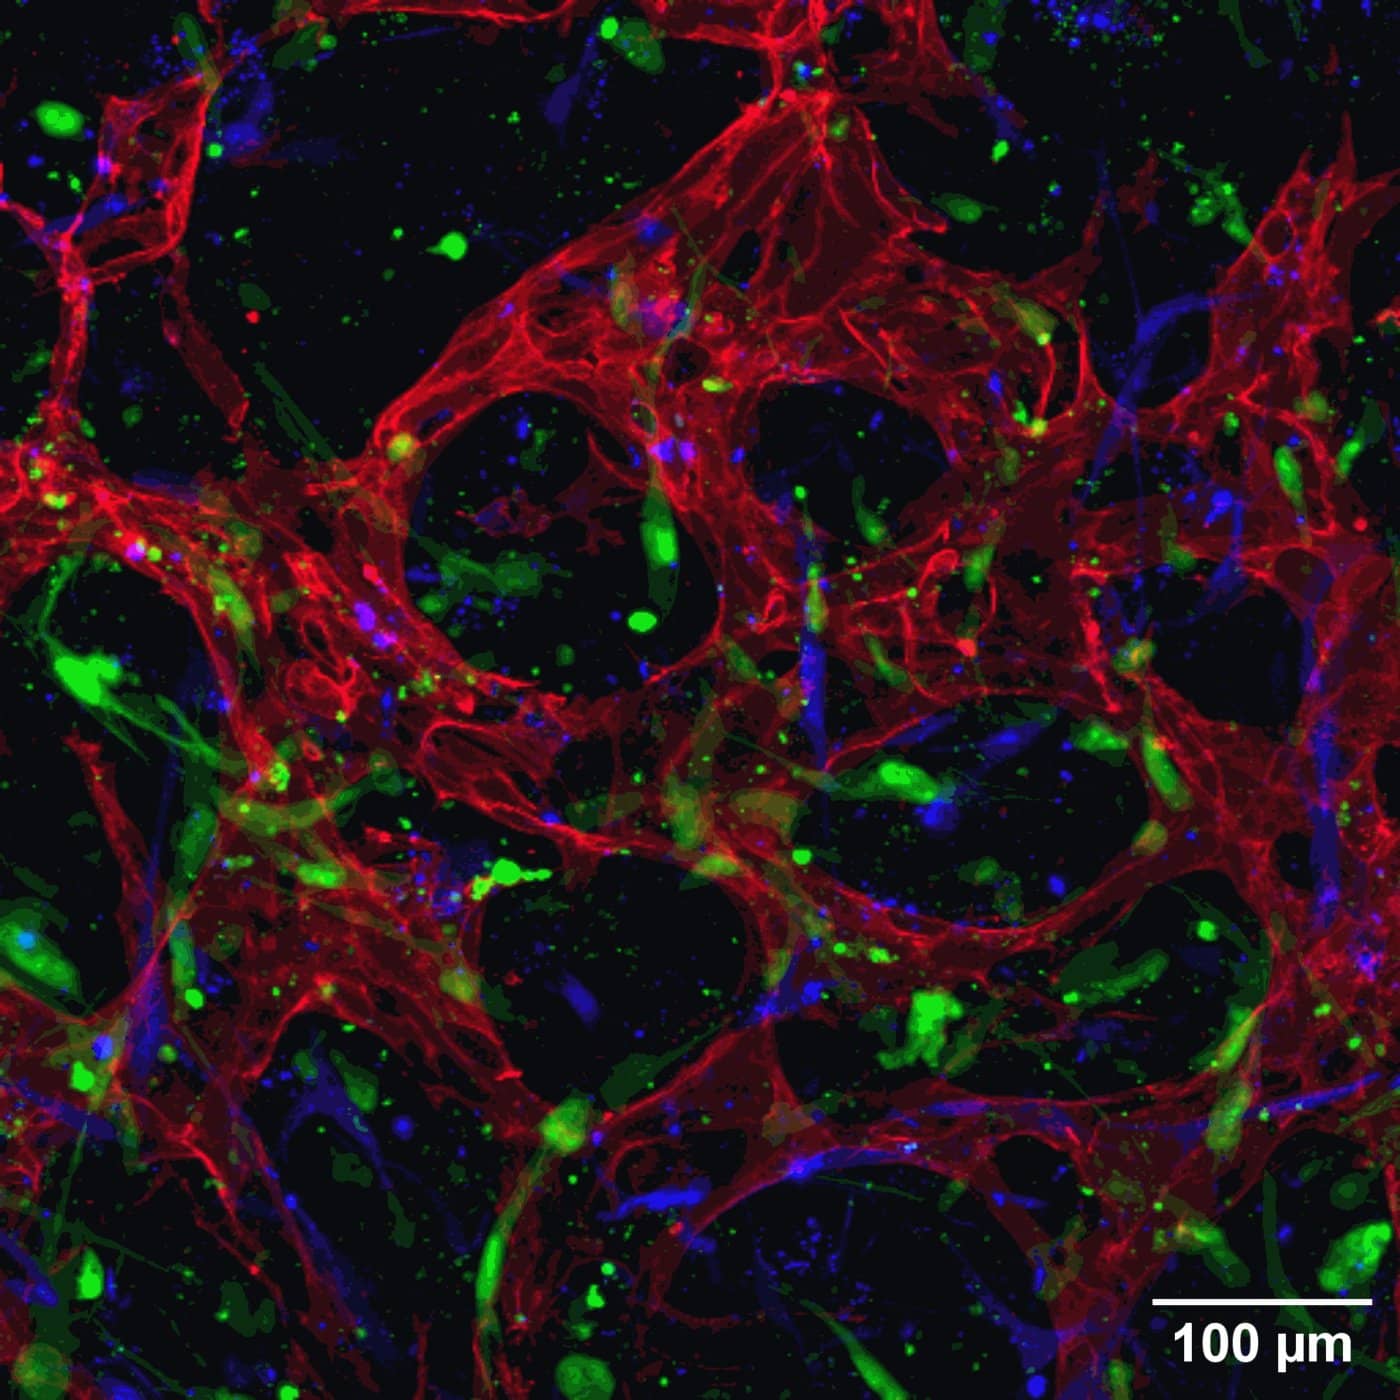  Agathe Figarol - Microvaisseaux crbraux in vitro. Rouge : cellules endothliales crbrales humaines, vert : astrocytes, bleu : pricytes.